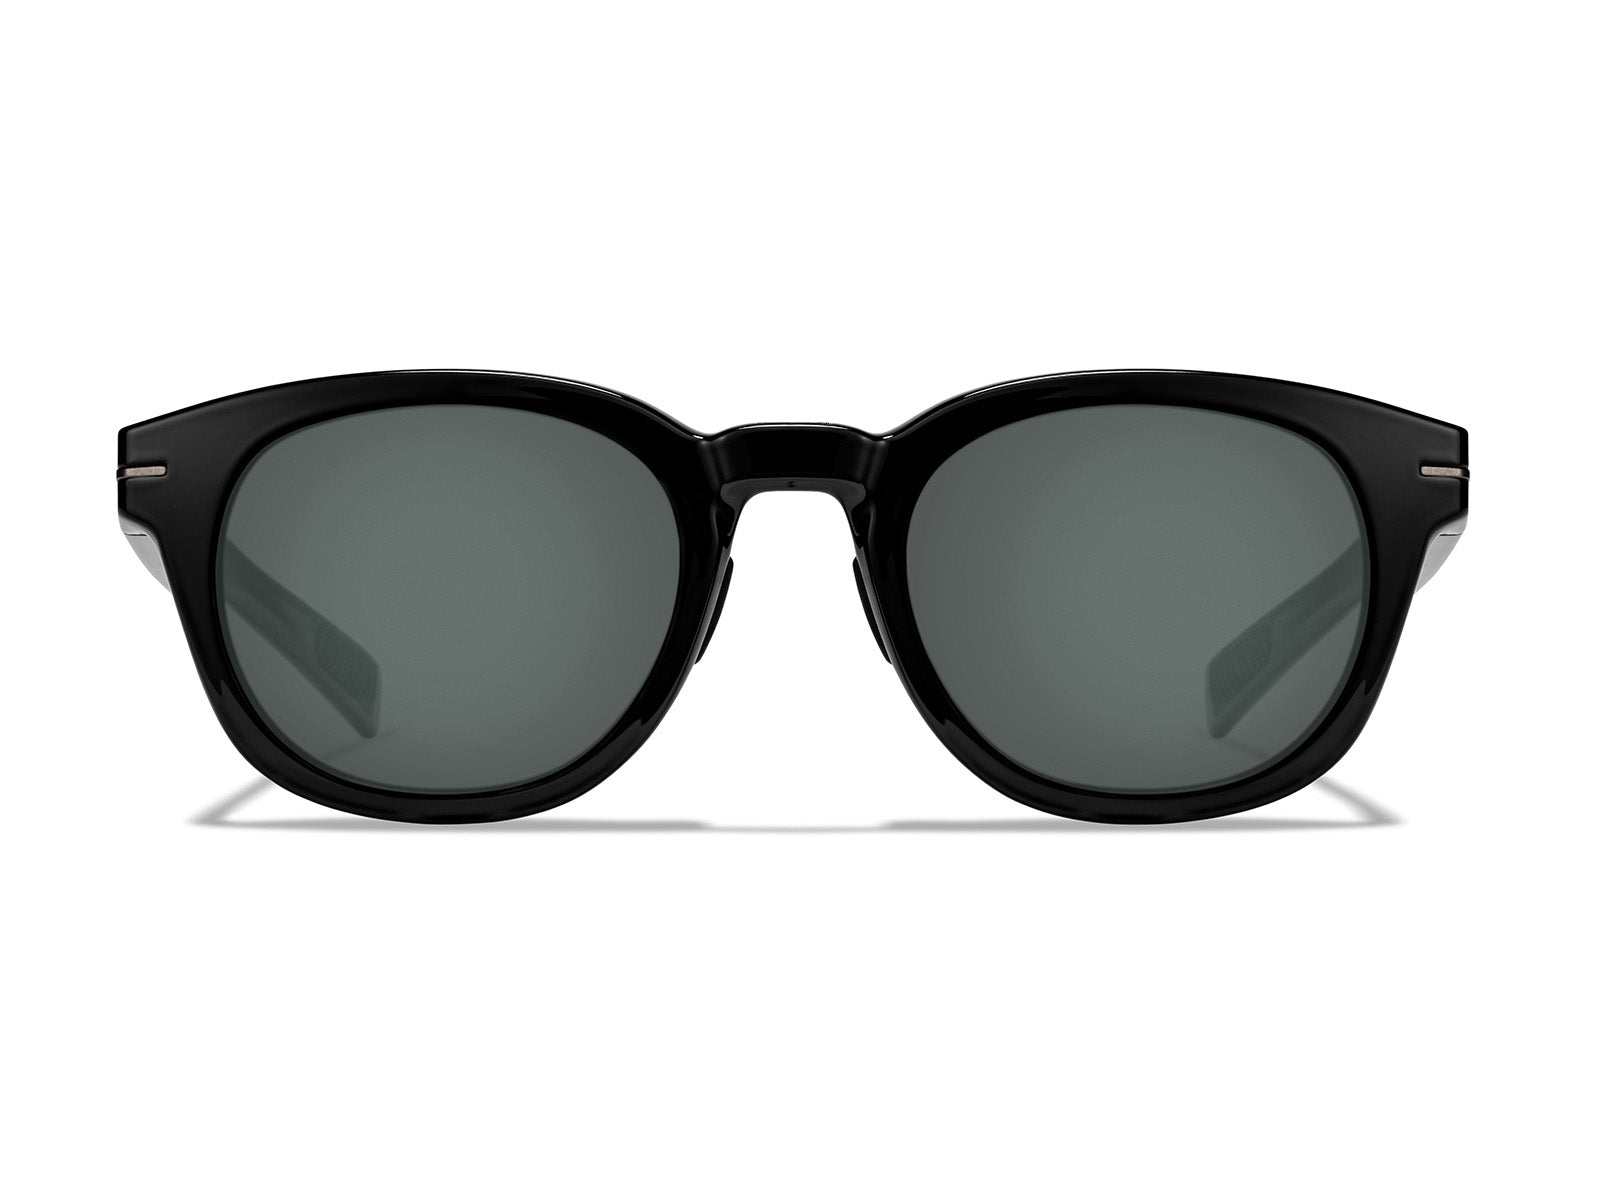 Roka Hamilton Sunglasses with Gloss Black Frames - Dark Carbon (Polarized) Lens